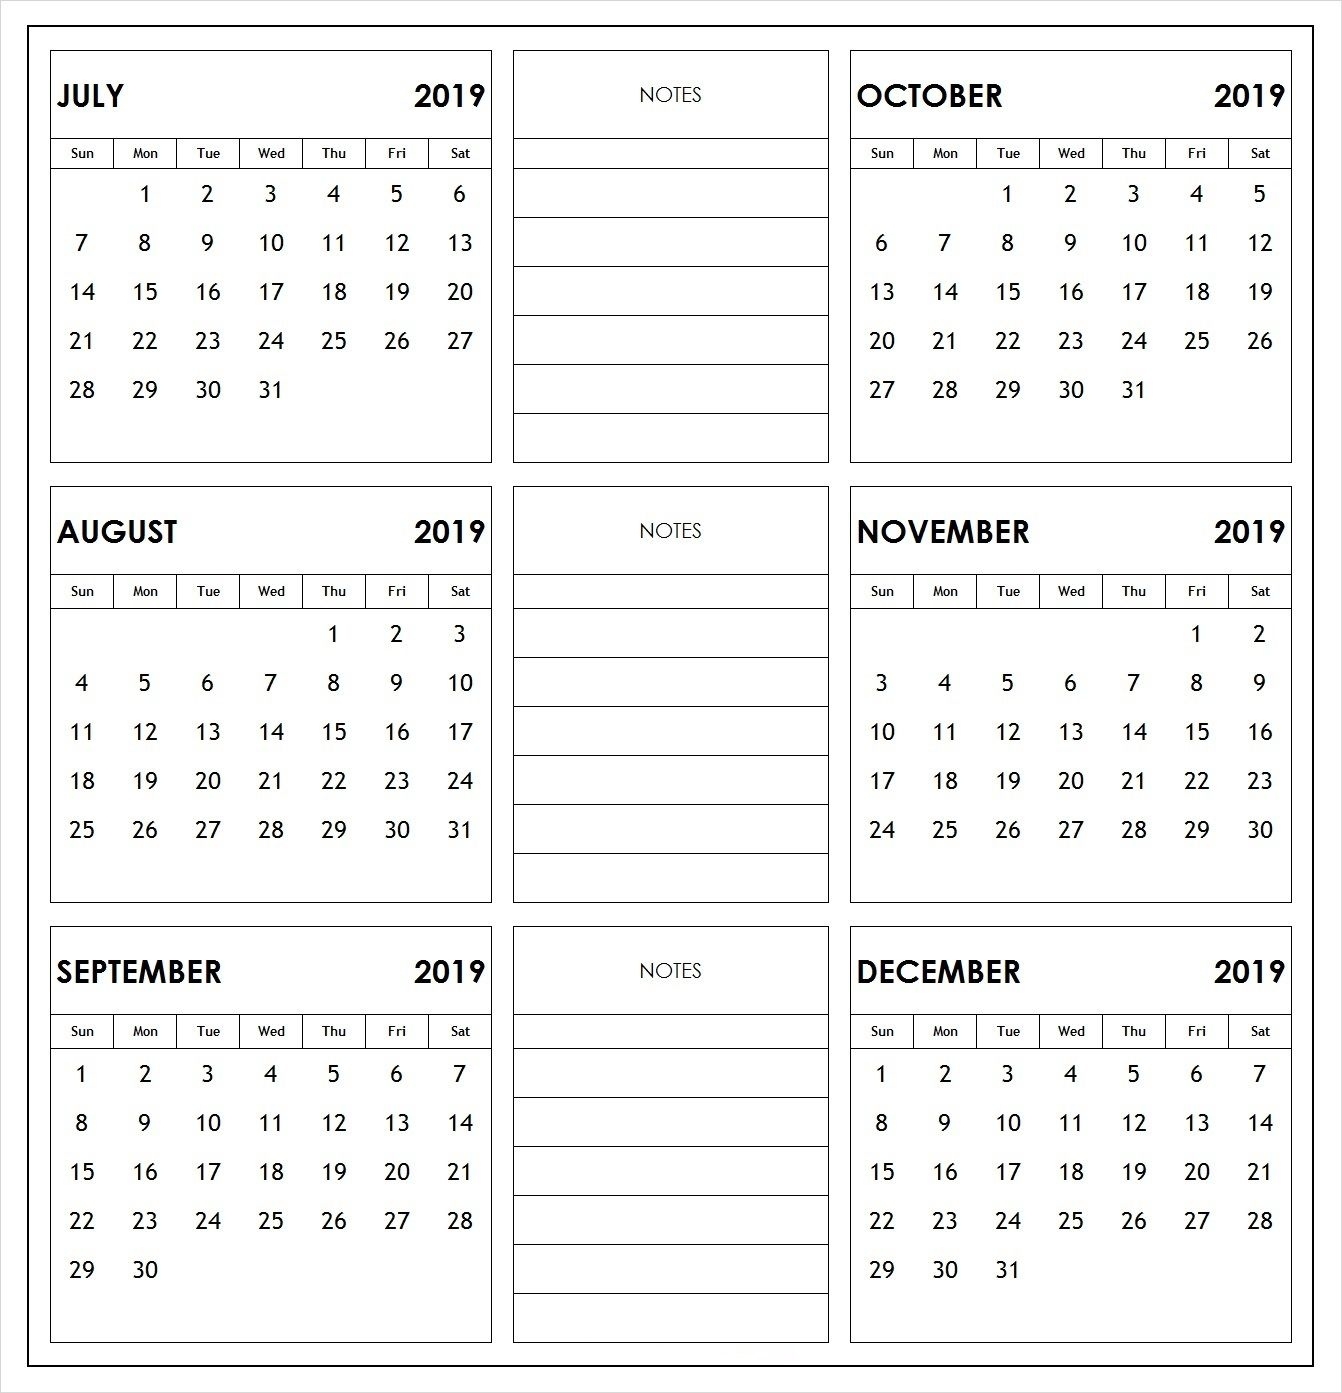 2019 Half Year Print Calendar | 2019 Calendars | Calendar, Print Print Calendar 6 Months